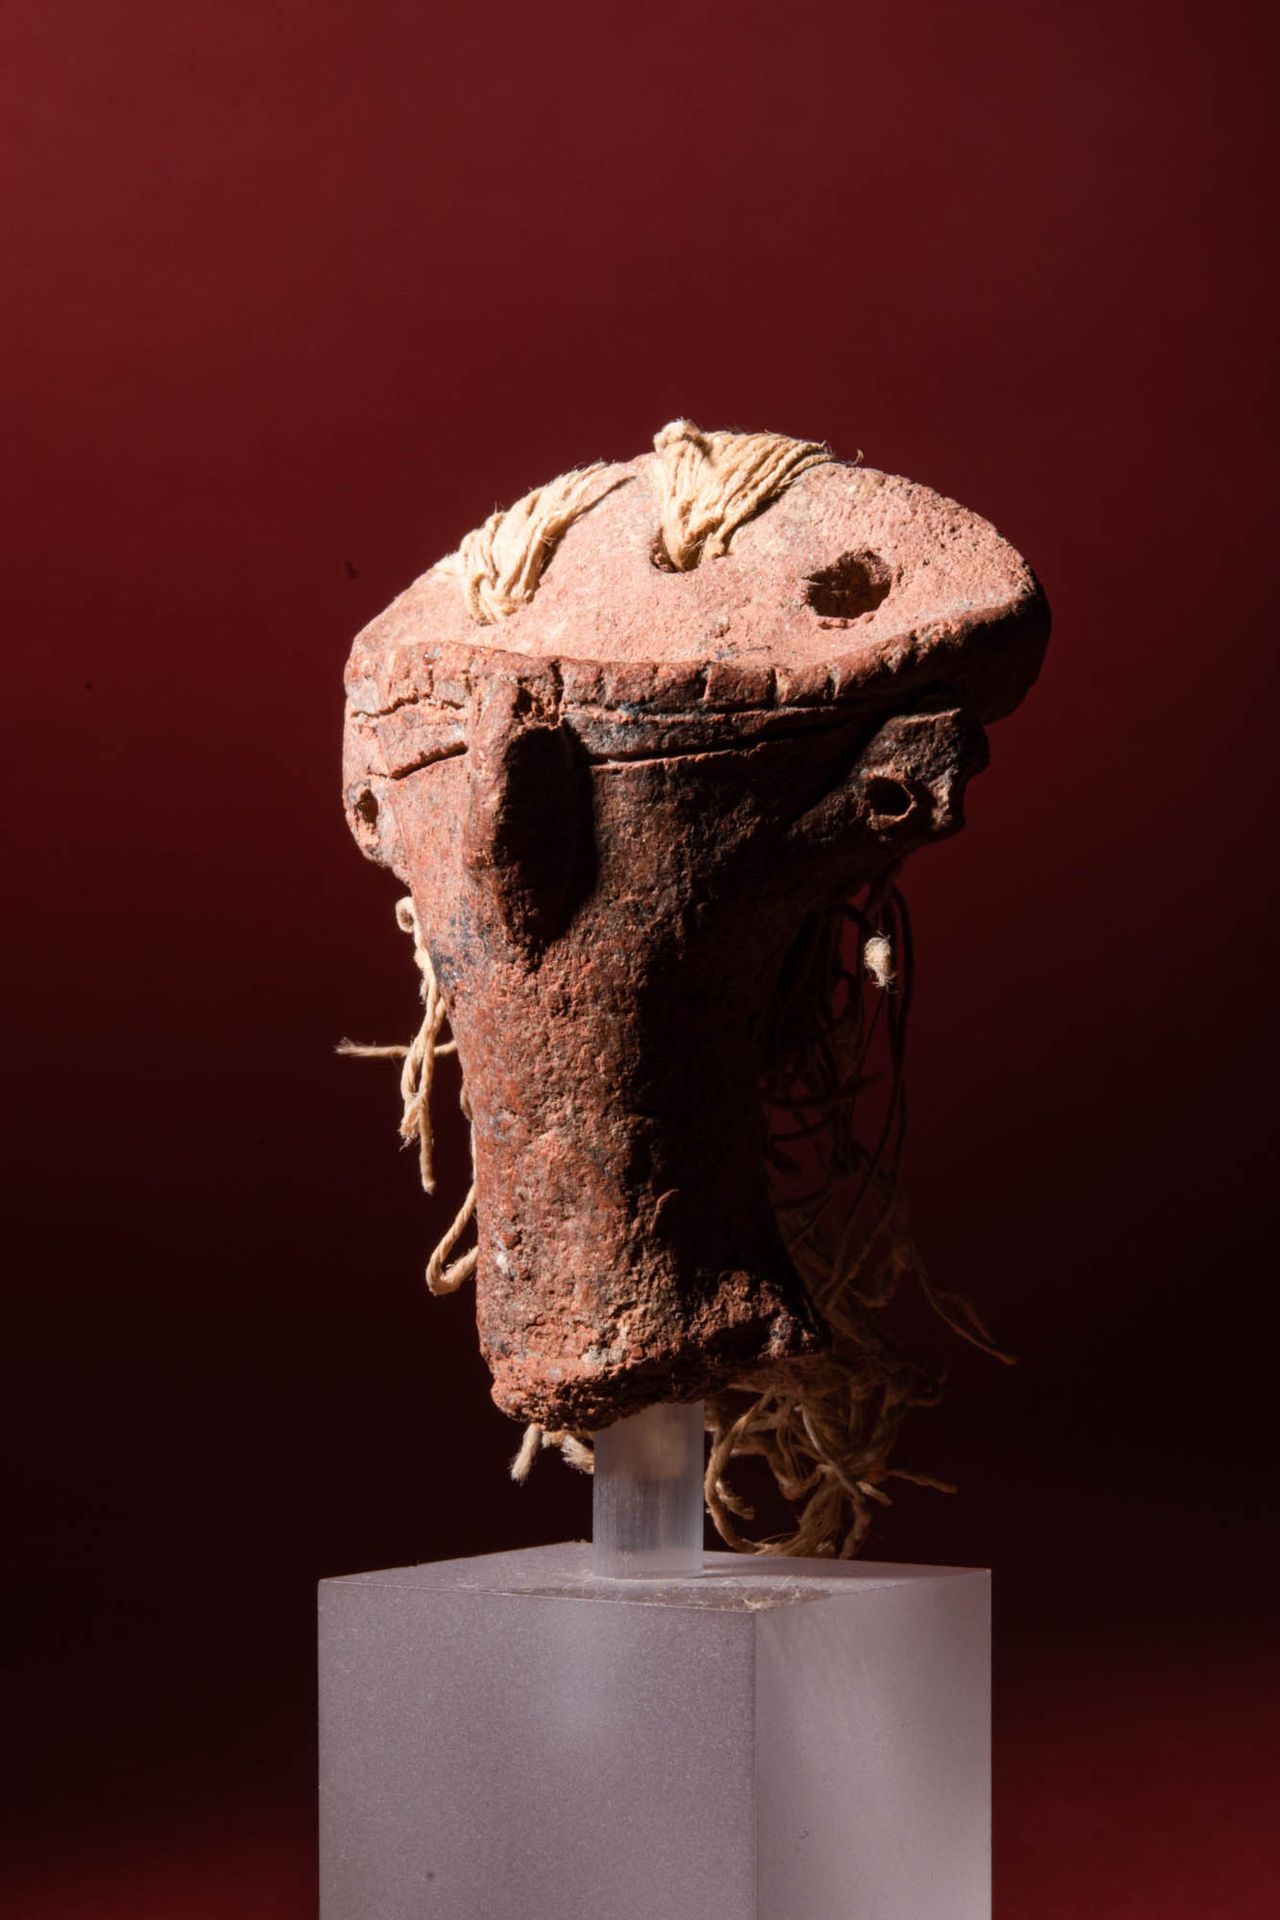 EGYPTIAN TERRACOTTA FEMALE HEAD 中王国，约公元前公元前 1976 - 1793 年
这是一个埃及中王国时期的女性陶俑头像，脖子很&hellip;